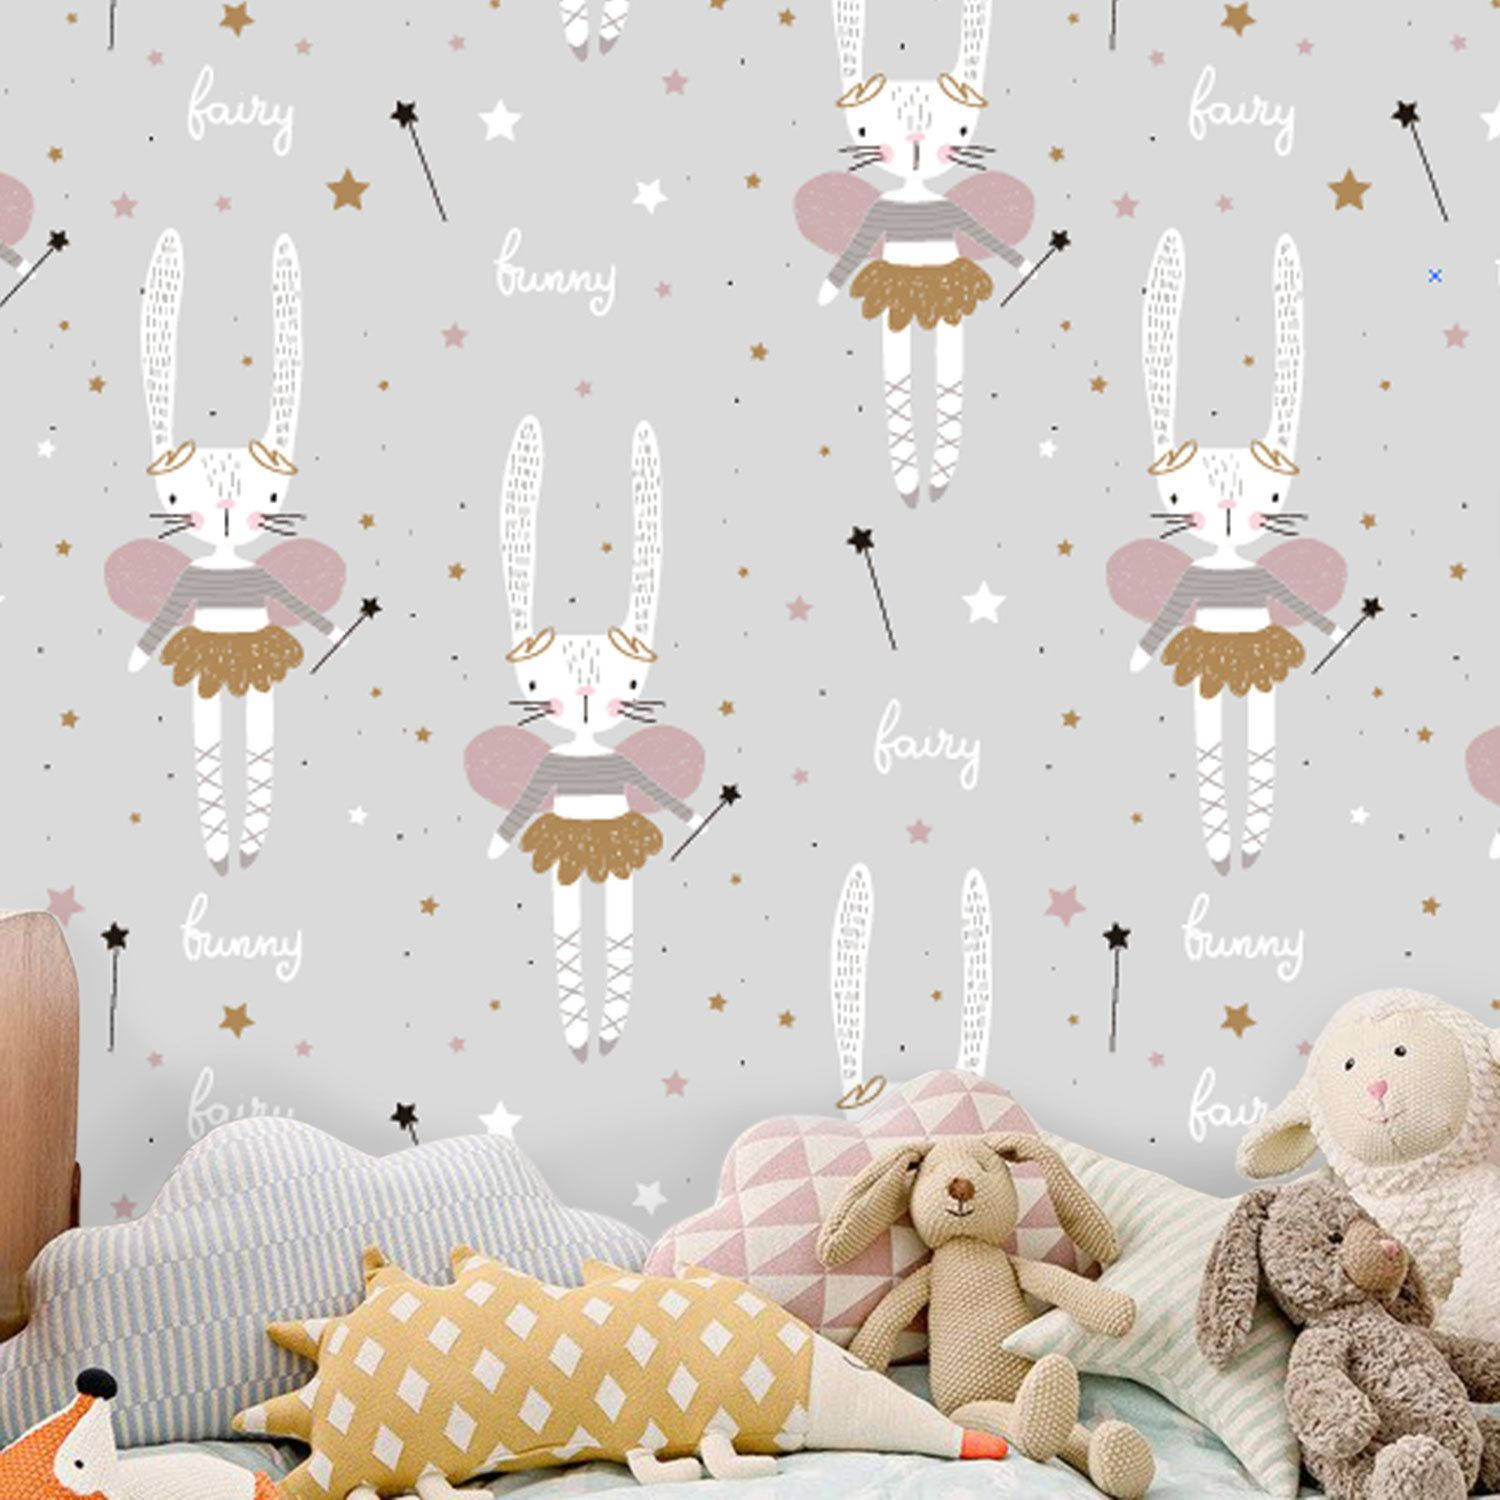 Cute Bunny Room Theme Wallpaper